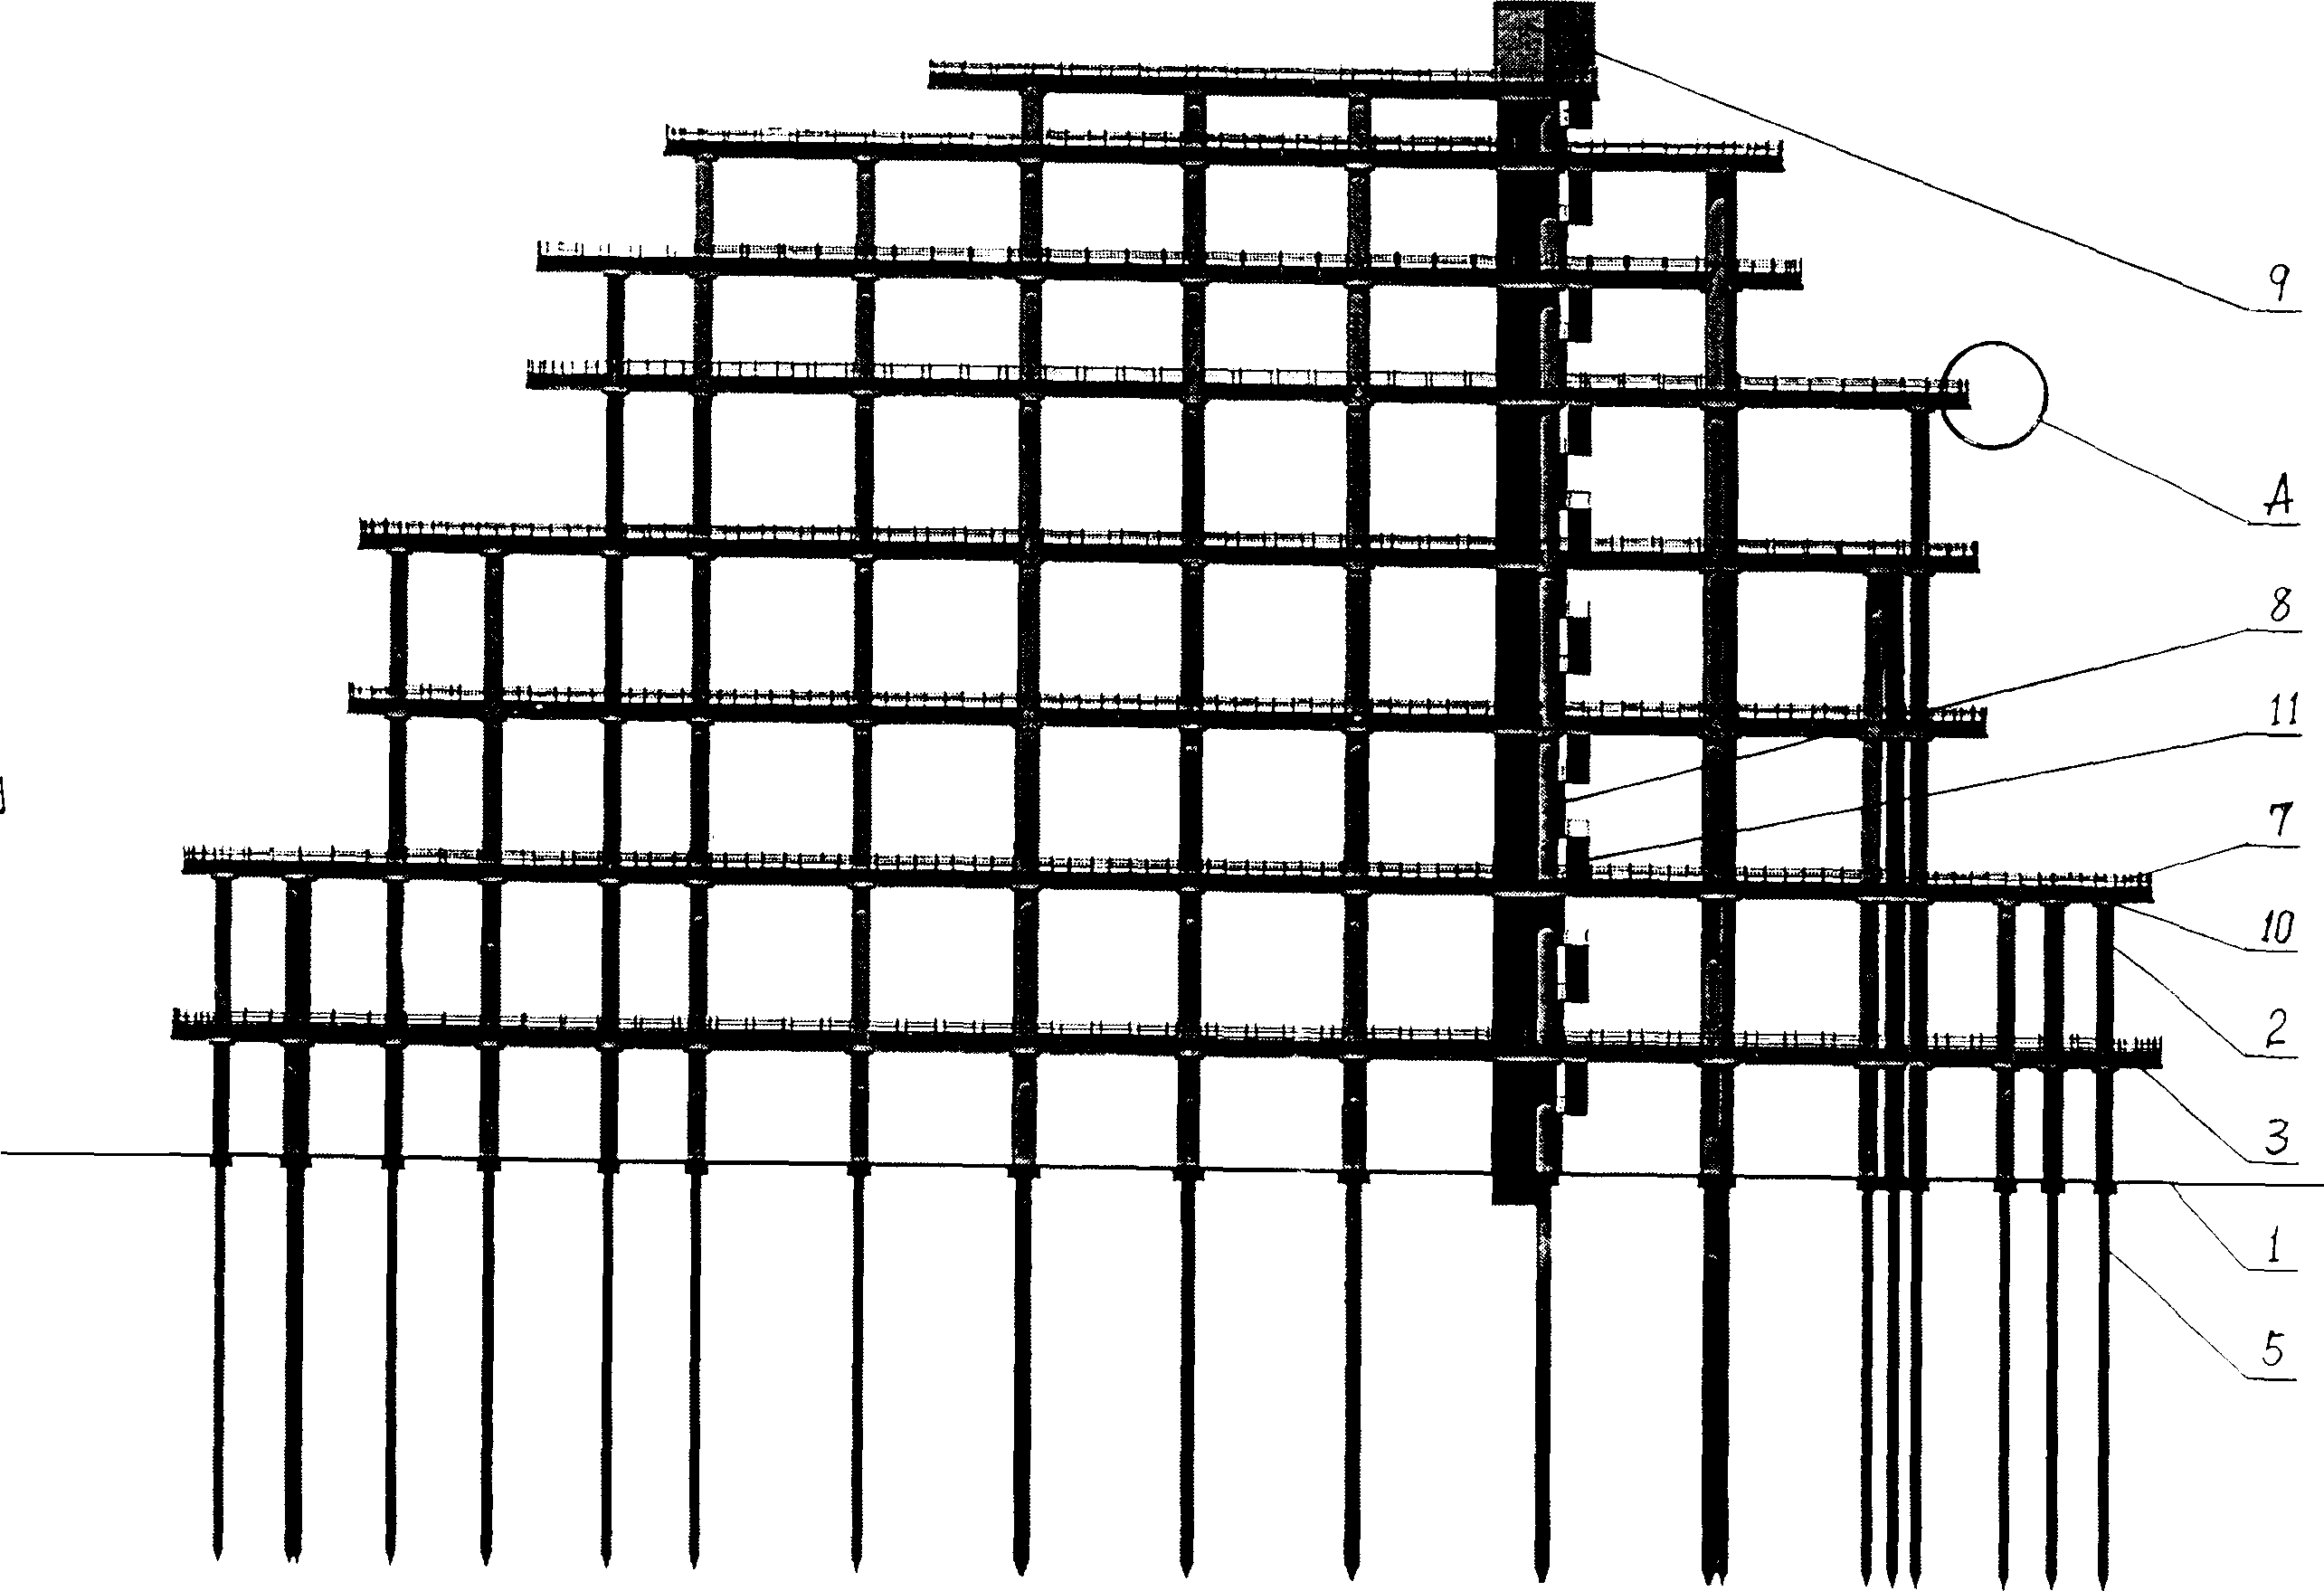 V-shaped building framework using space to reclaim land